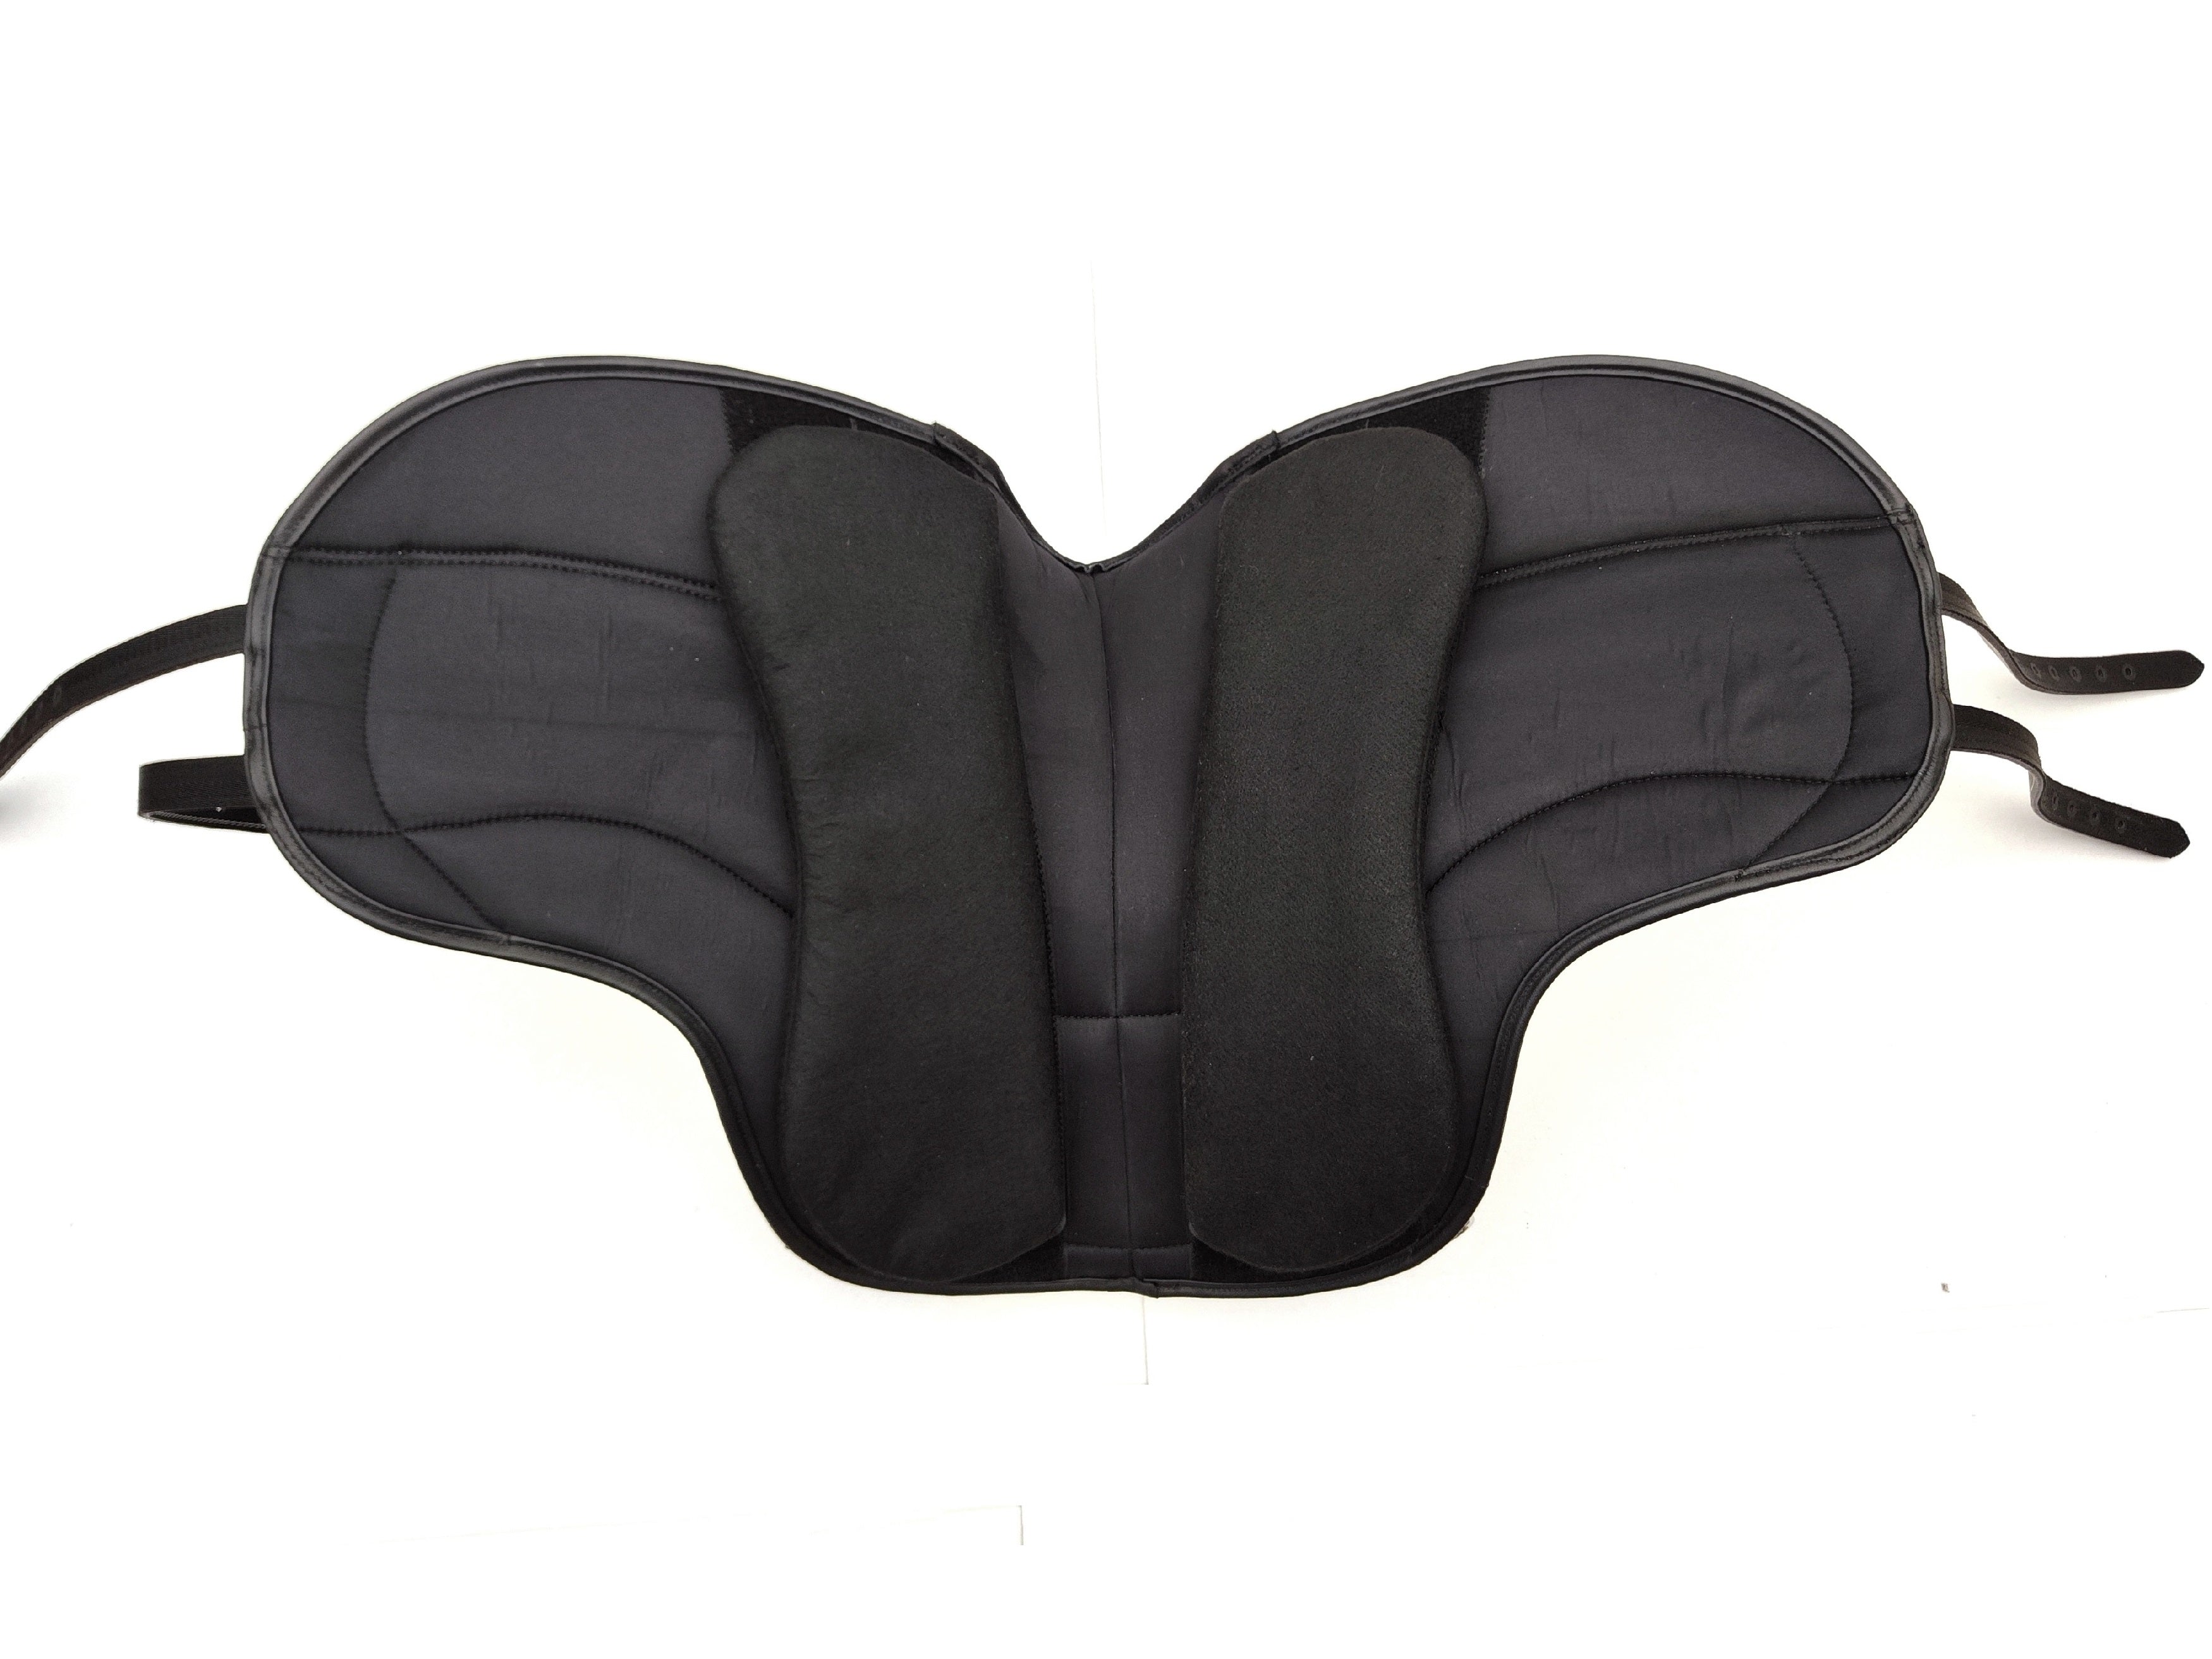 "ALIVIO IMPULSO" NAPPALEDER dressage riding pad - WBS channel - SLIM felt cushion - knee blocks